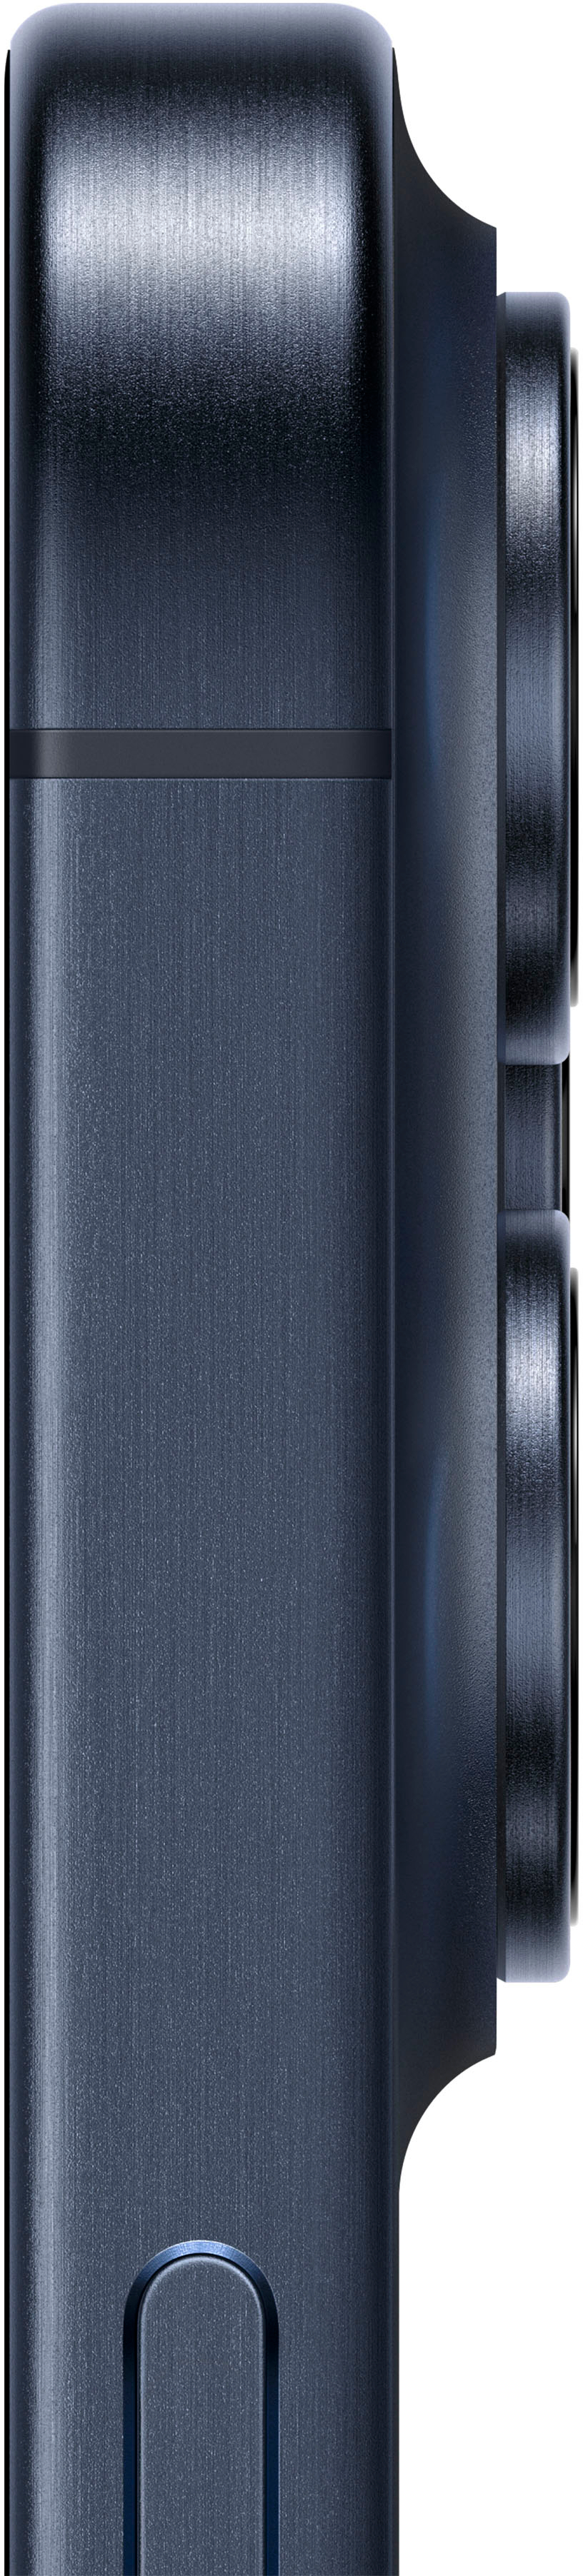 Apple iPhone 15 Pro 128GB Blue Titanium (Verizon) MTQQ3LL/A - Best Buy